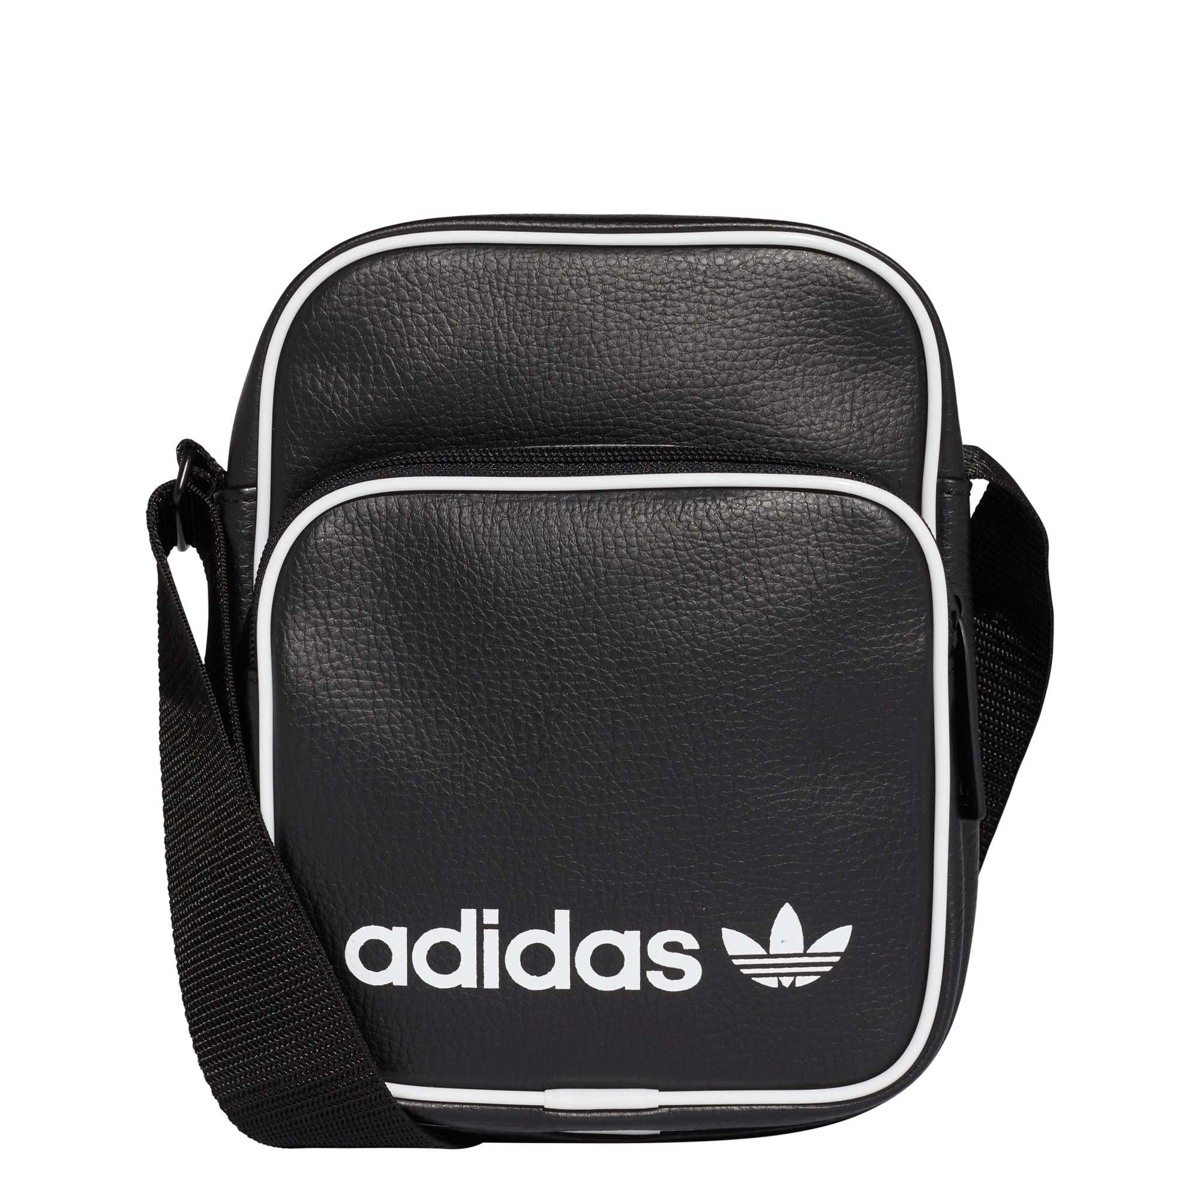 Adidas Originals Mini Bag